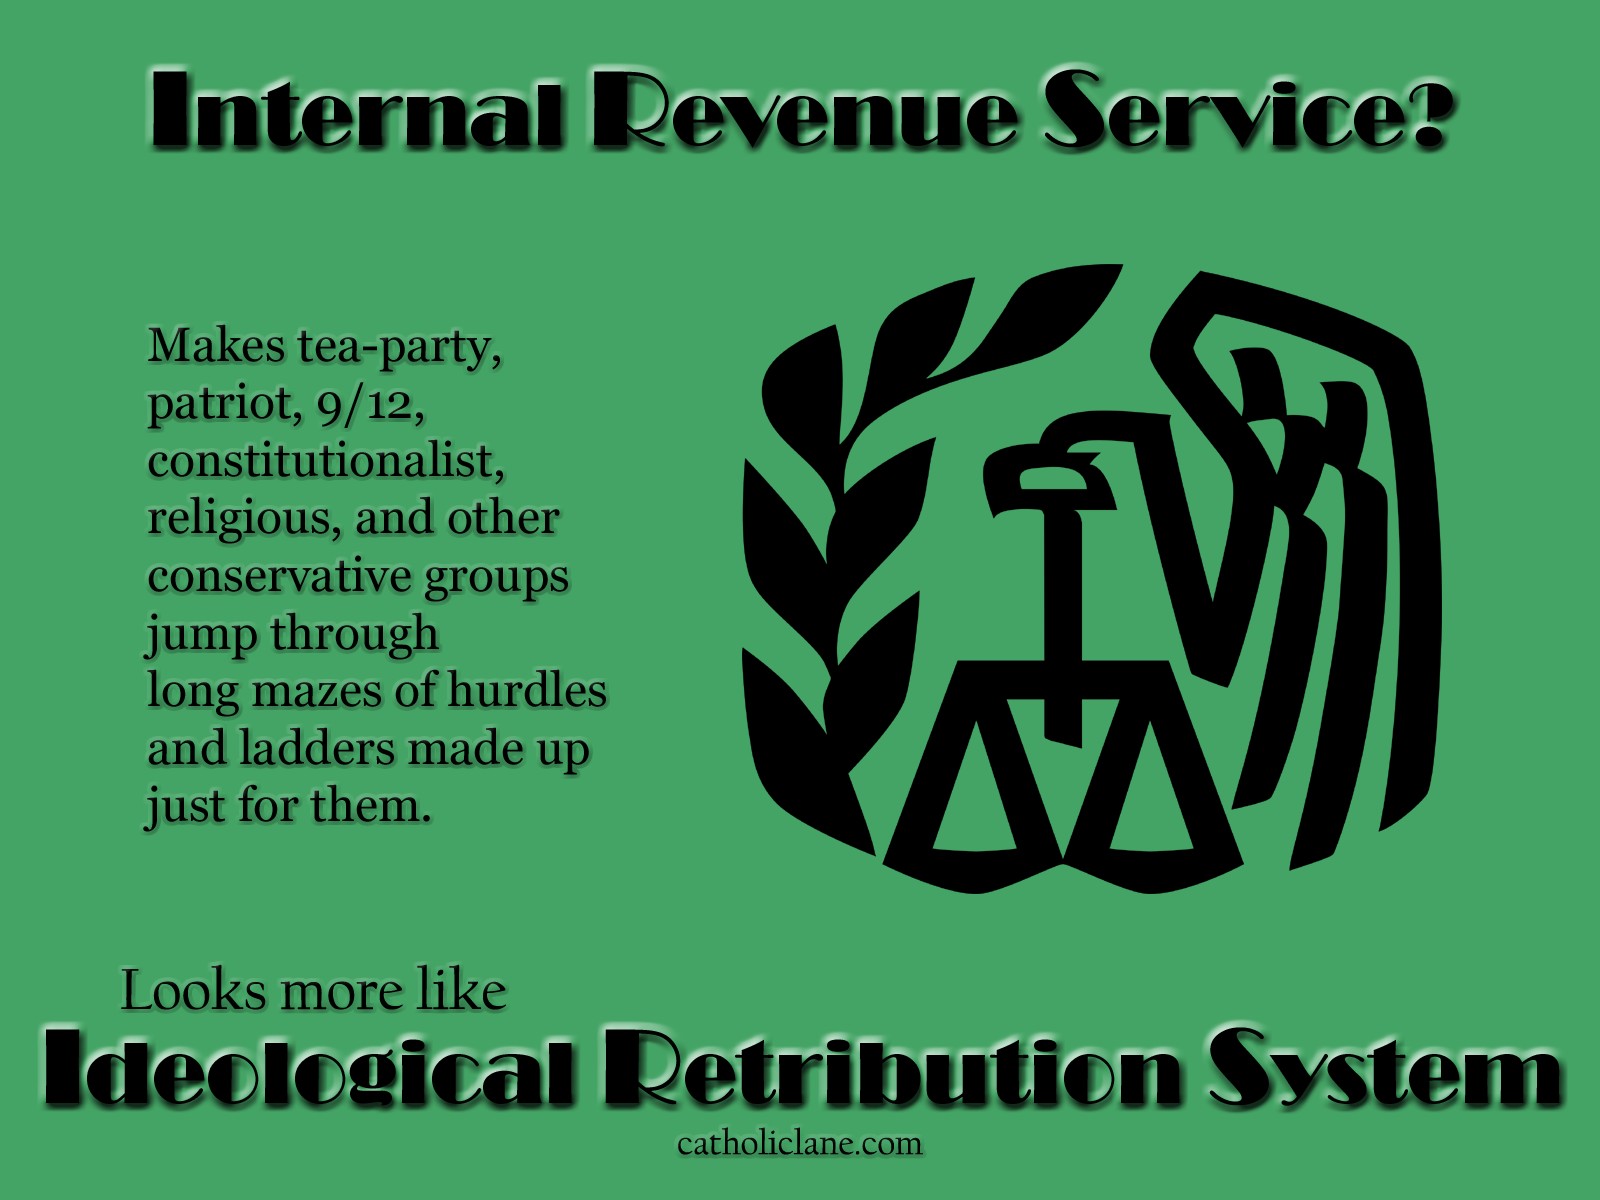 IRS = Ideological Retribution System